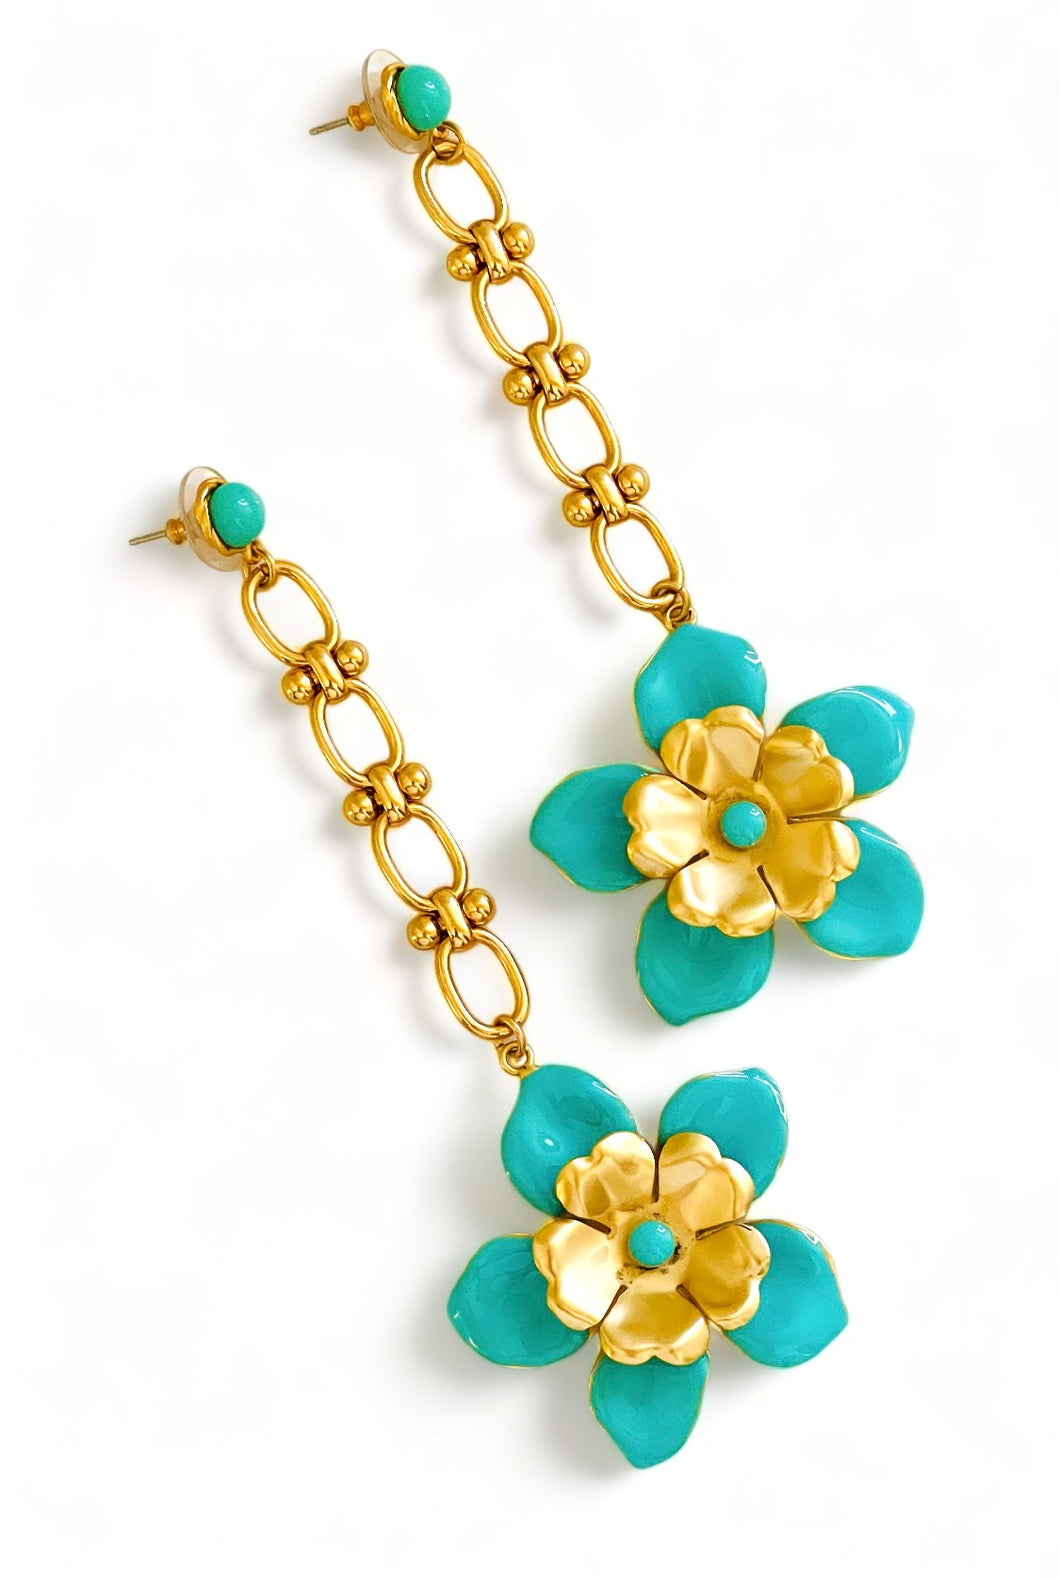 ONLY 1 LEFT!!! Flower Drop Earrings with Turquoise Enamel